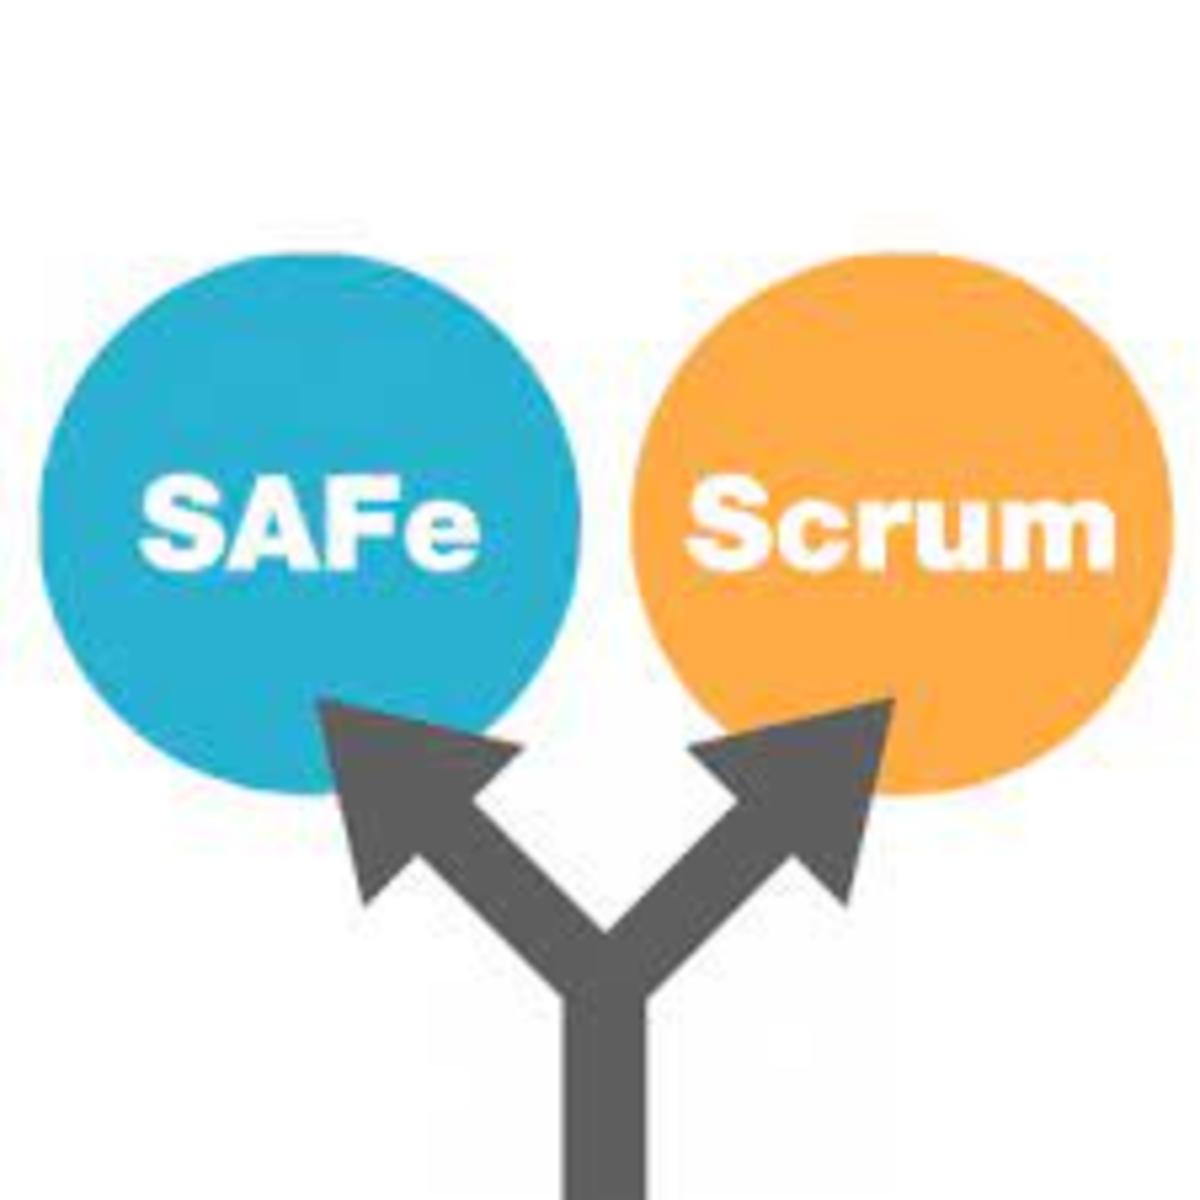 Is Scaled Agile Framework Better Than Scrum?